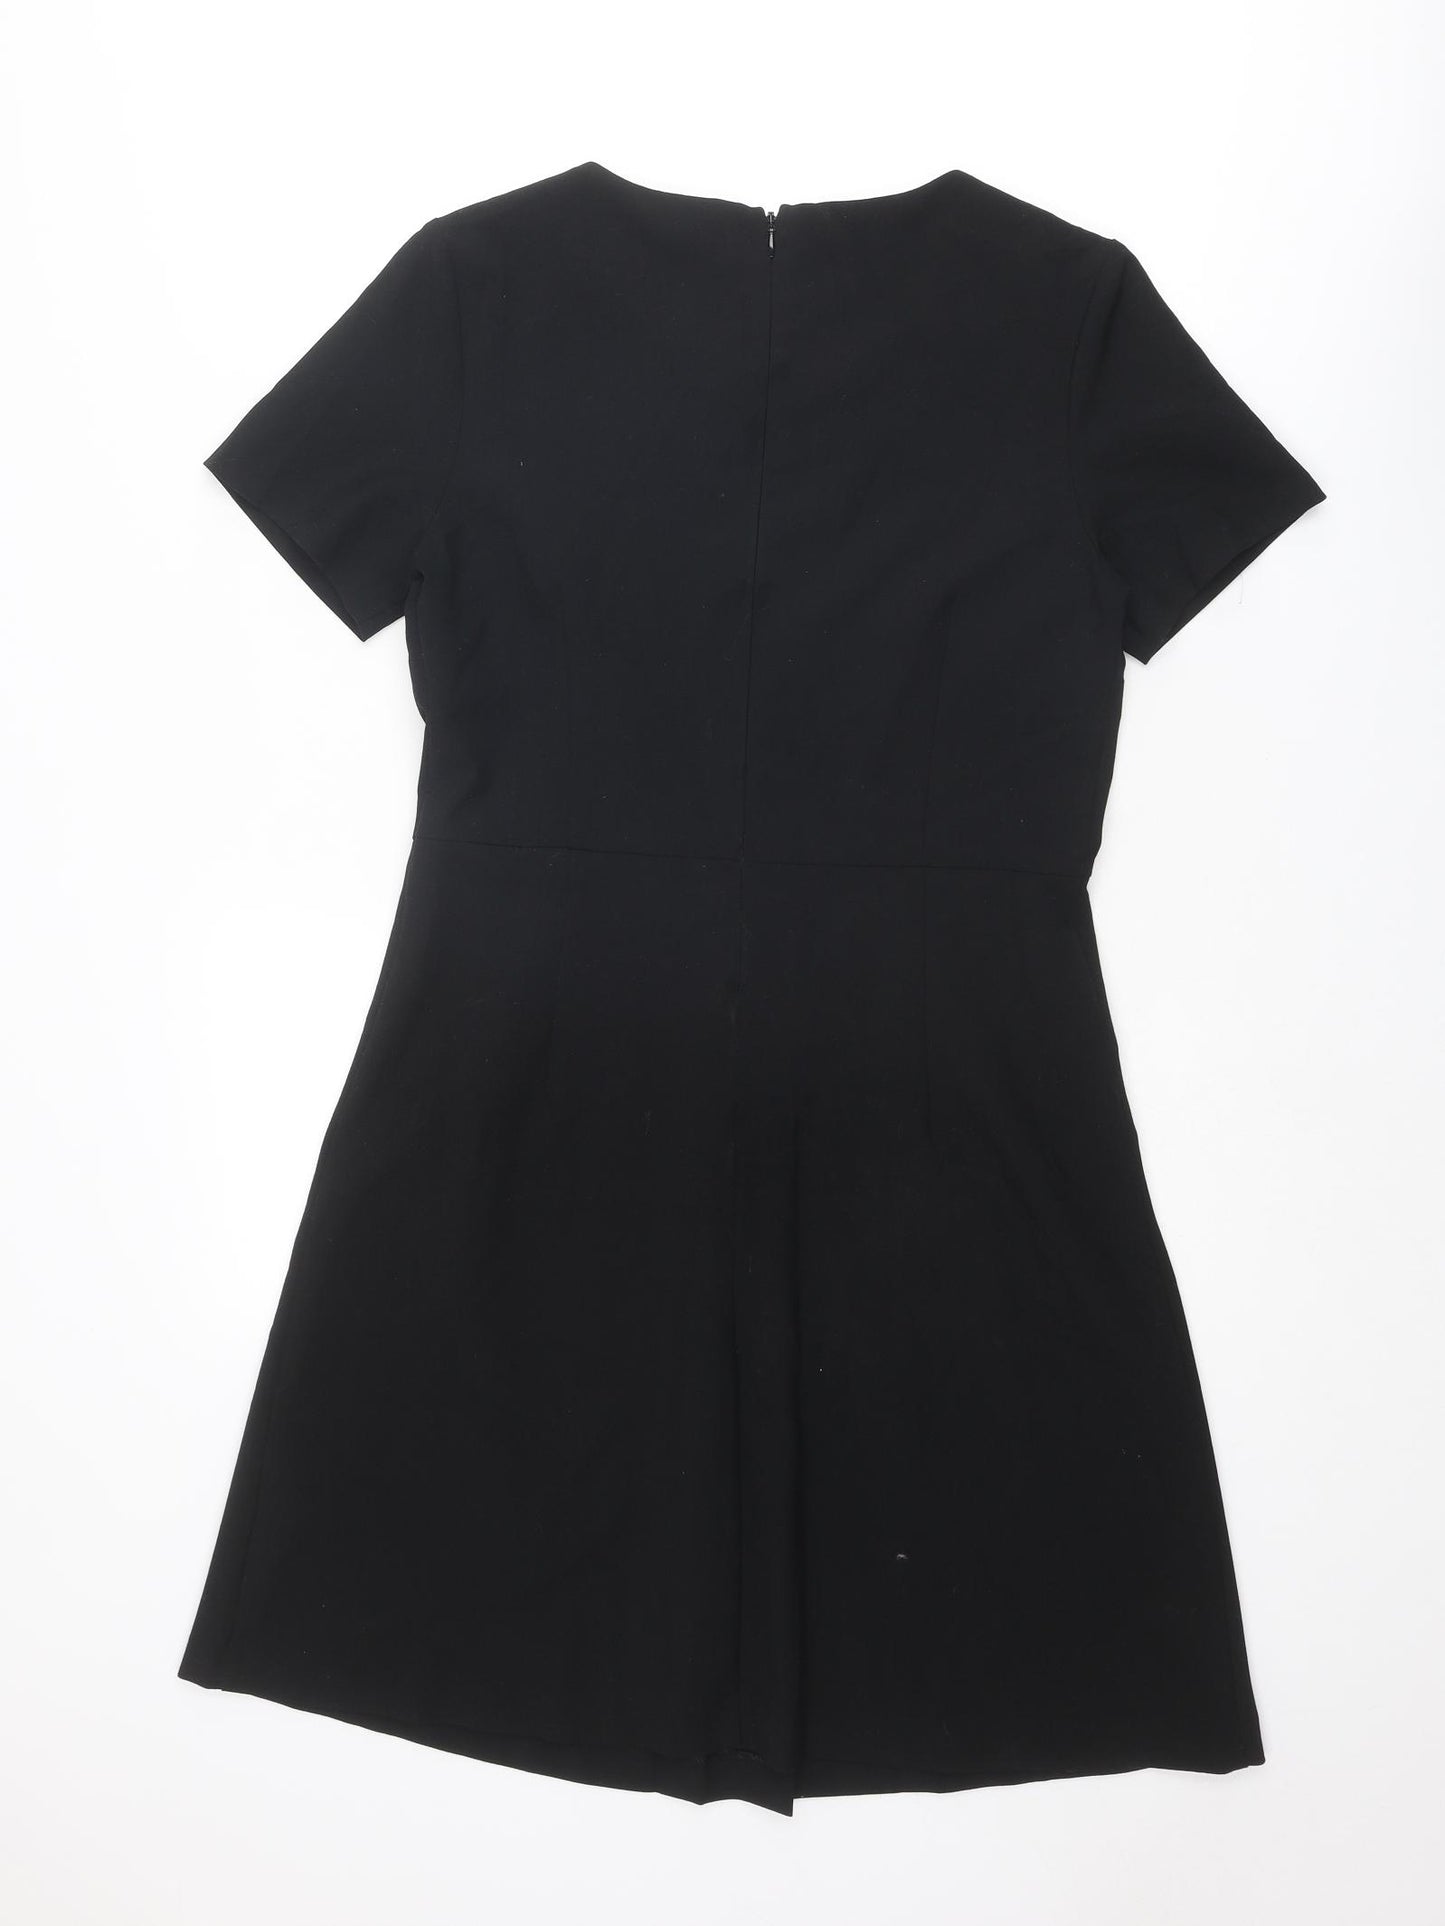 NEXT Womens Black Polyester A-Line Size 12 Round Neck Zip